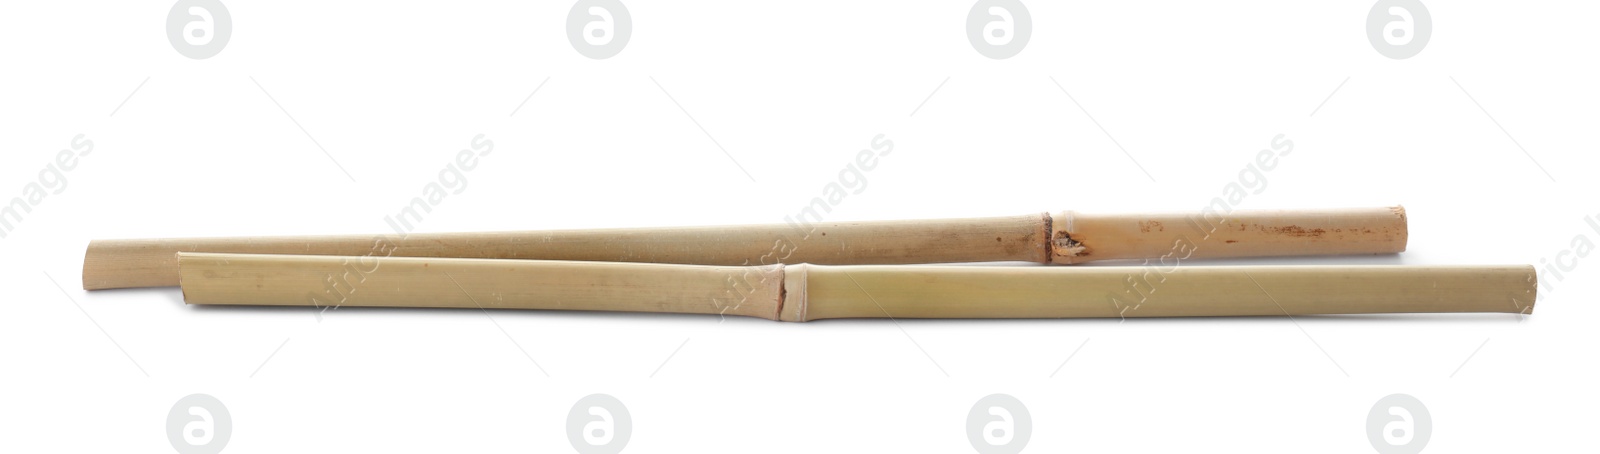 Photo of Dry bamboo sticks on white background